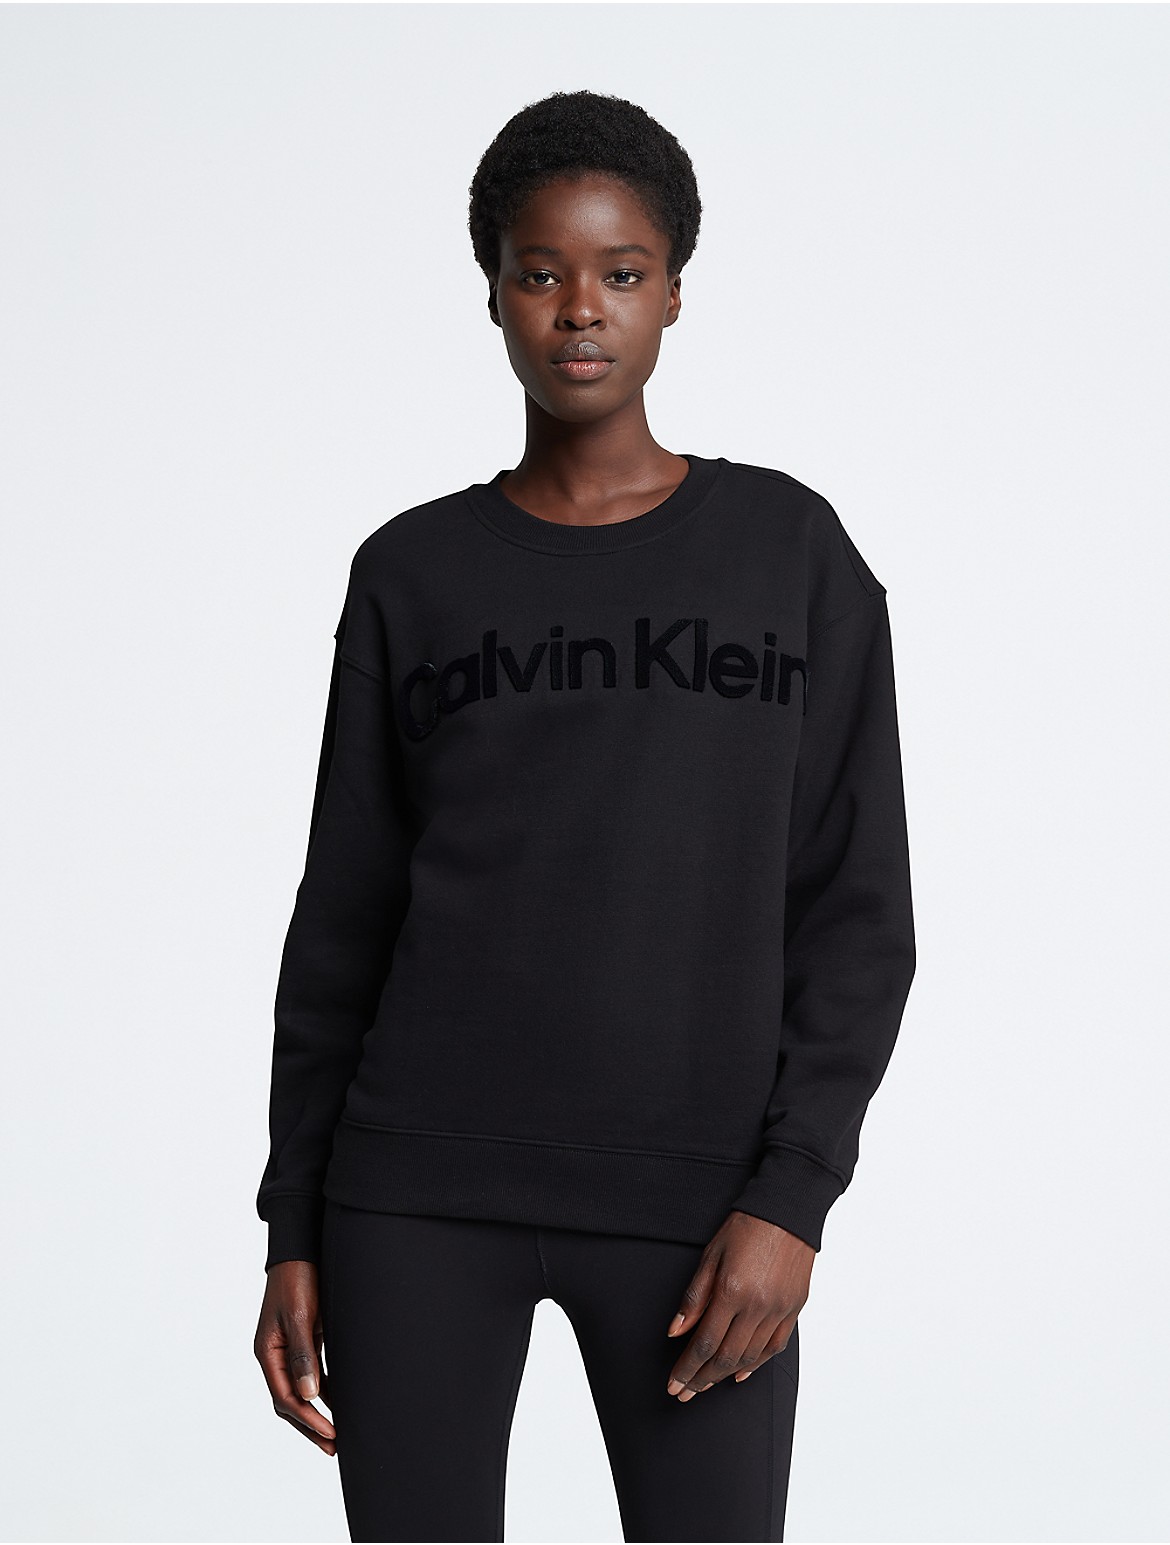 Calvin Klein Women's Velvet Crewneck Sweatshirt - Black - XL